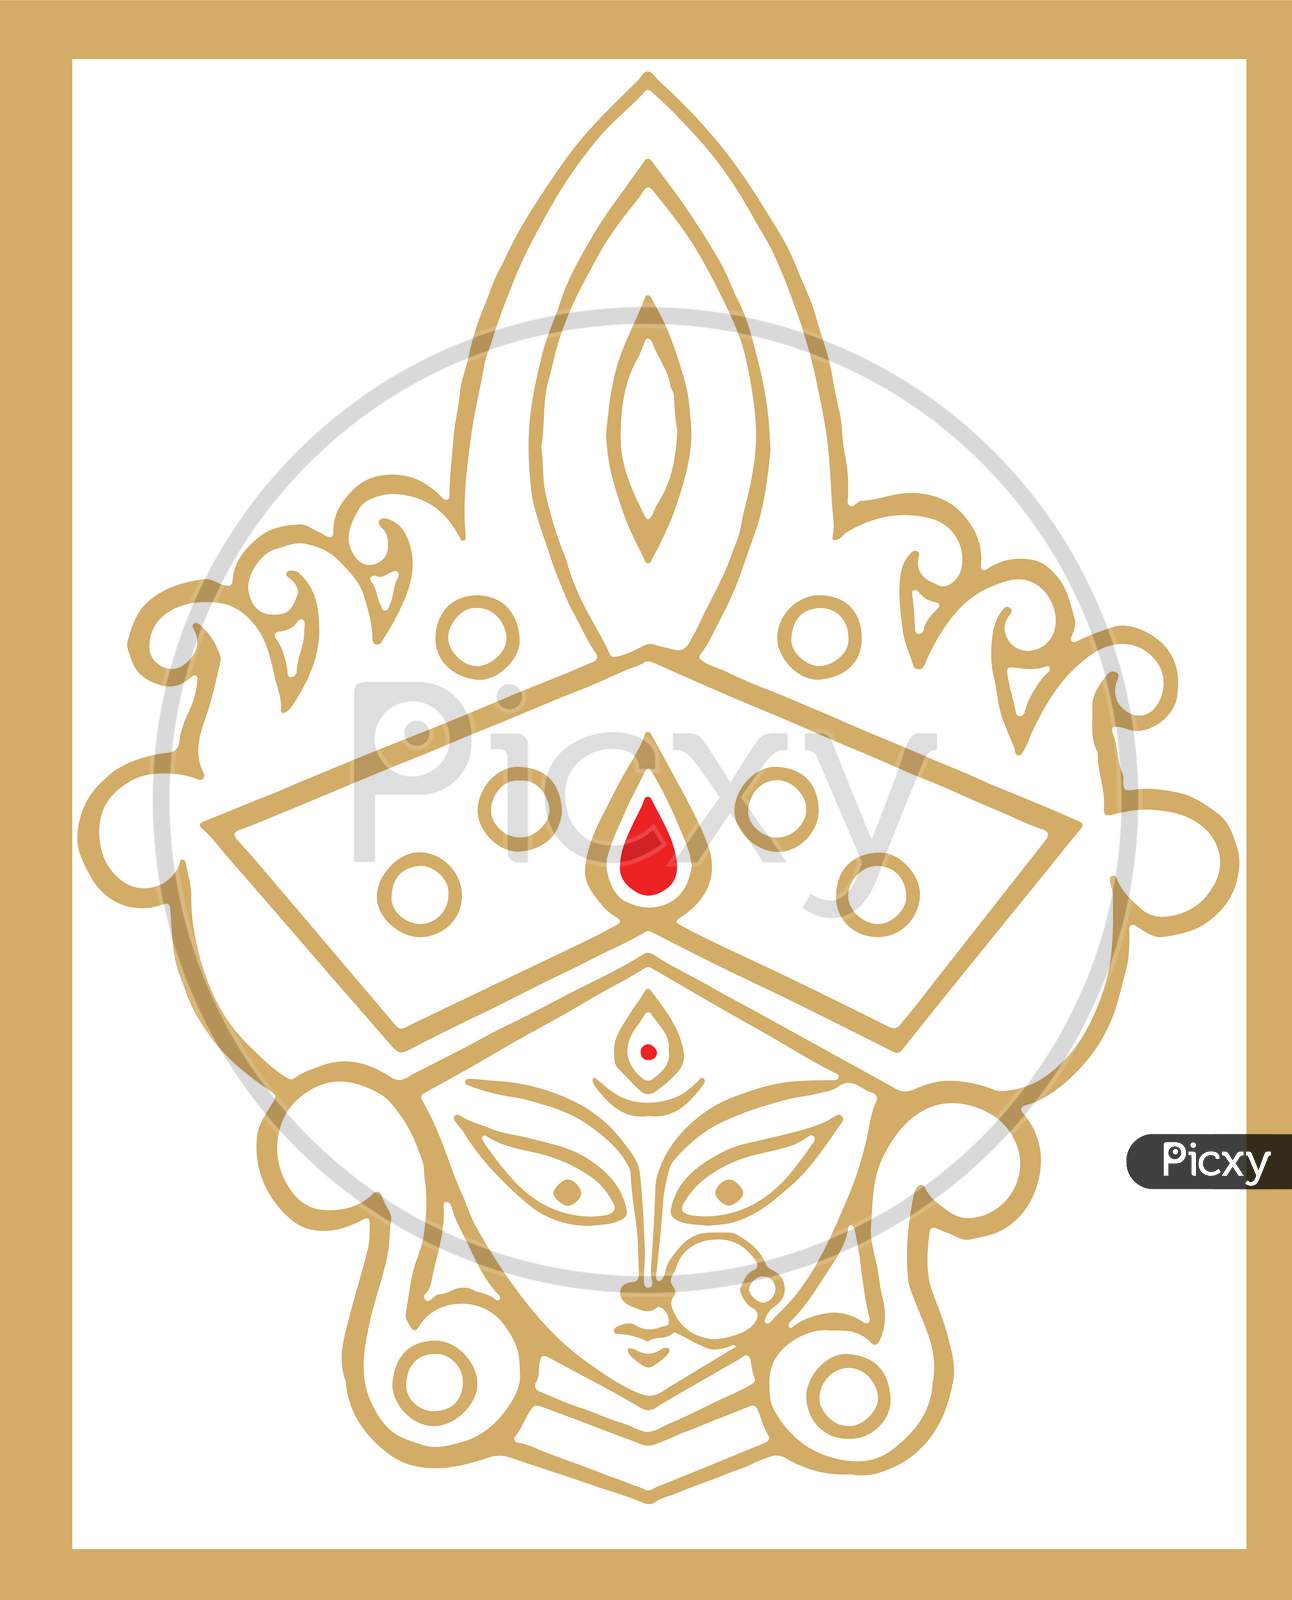 Image of Sketch Of Goddess Durga Maa Or Durga Closeup Face Design Element  In Outline Editable Vector Illustration For A Dasara Festival  CelebrationTZ463870Picxy